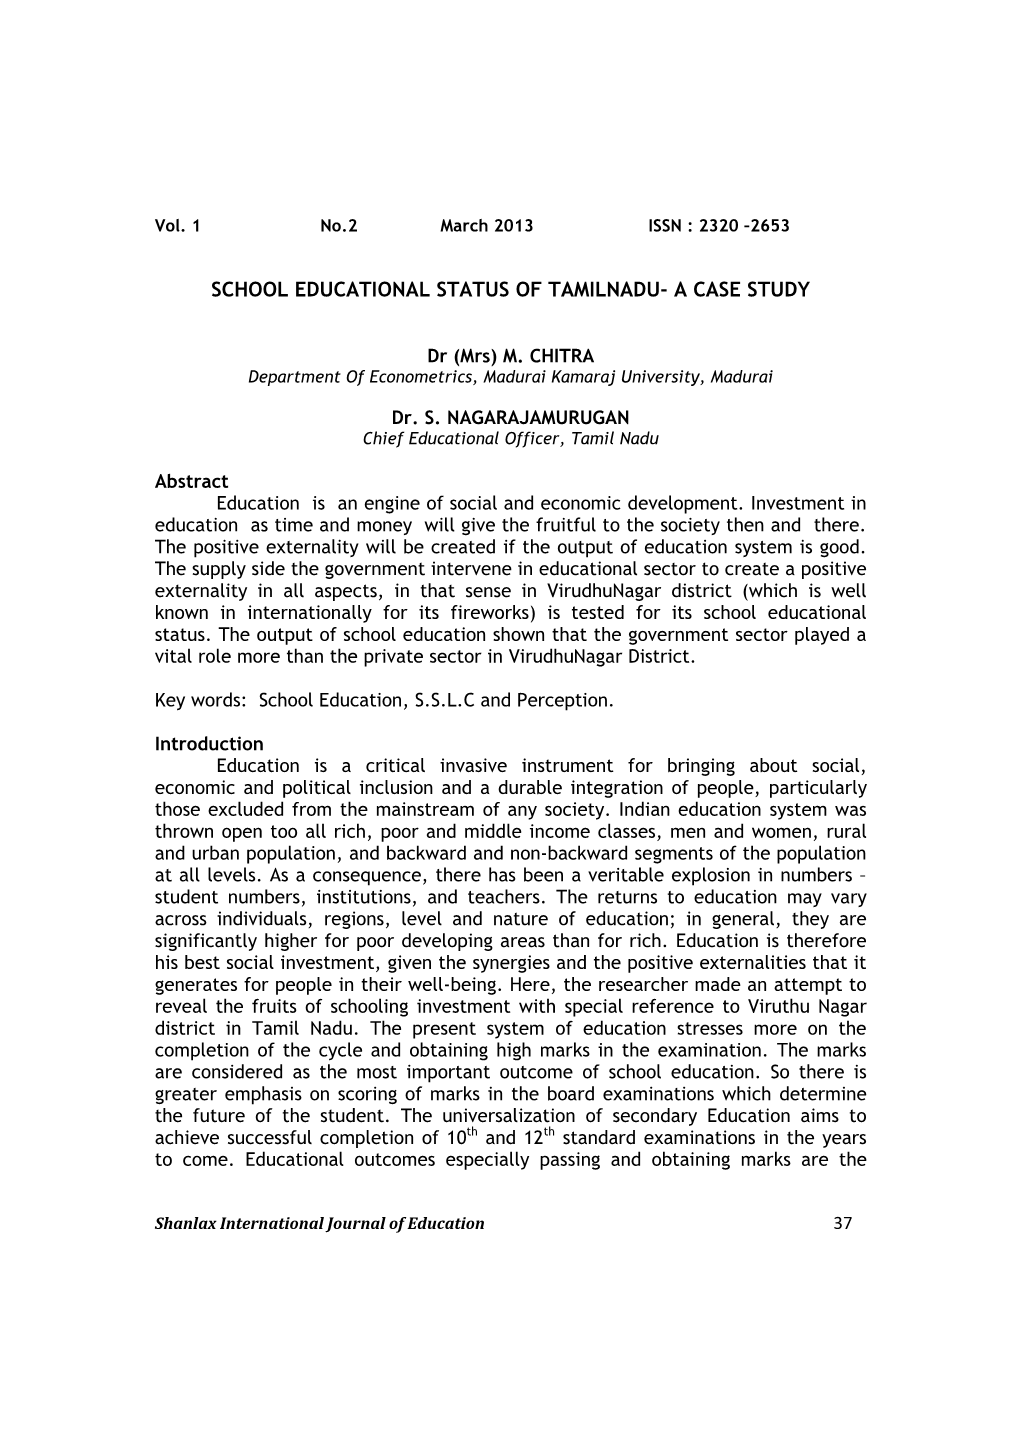 School Educational Status of Tamilnadu- a Case Study